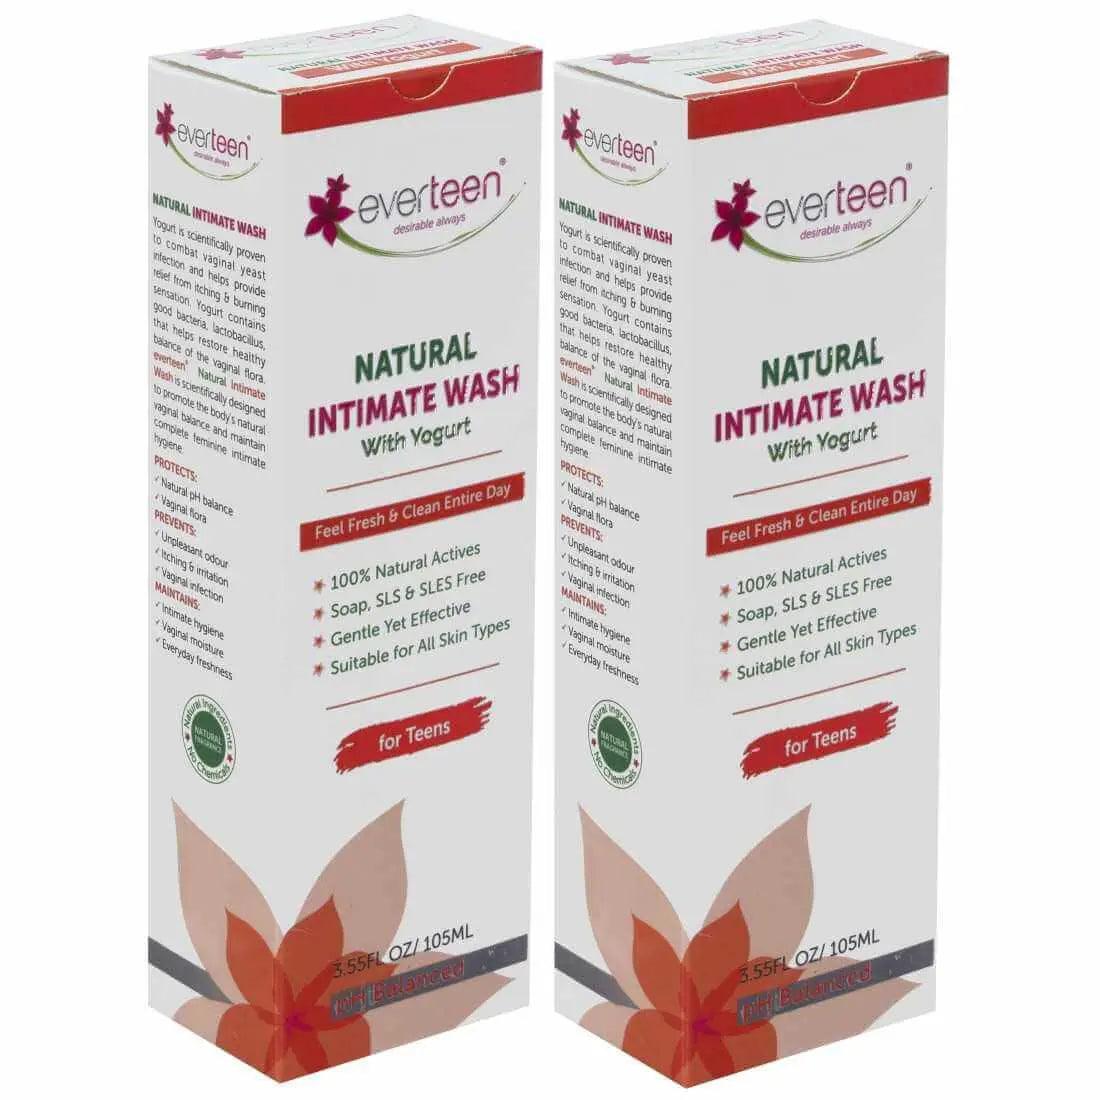 everteen Yogurt Intimate Wash for Teens - Natural Feminine Intimate Hygiene